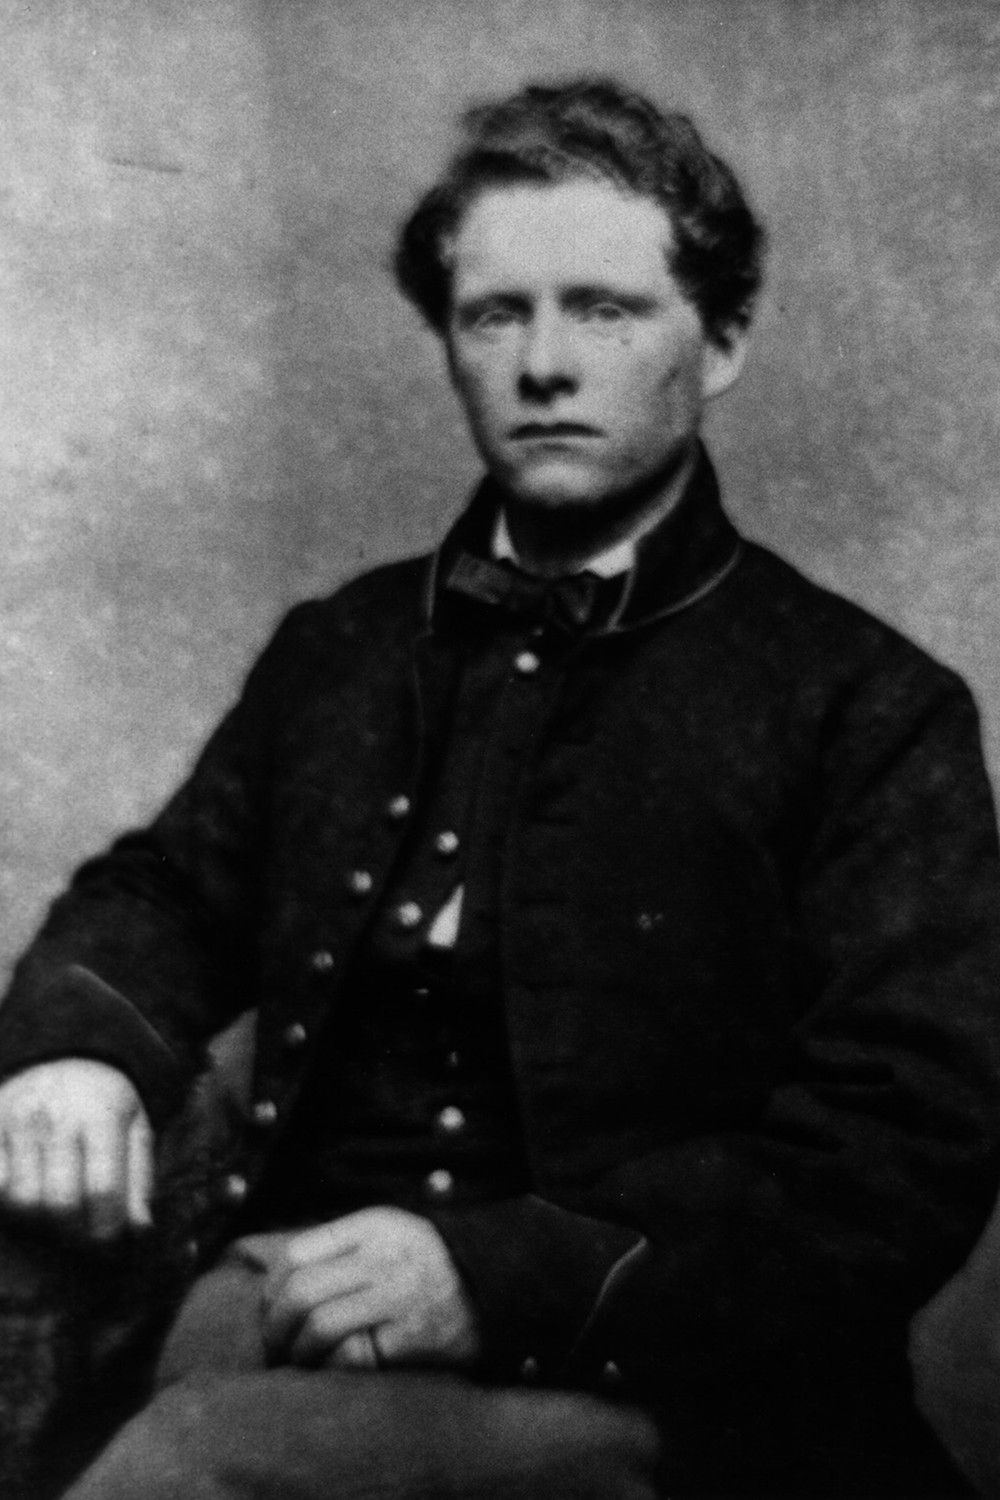 William Charles Henry Reeder